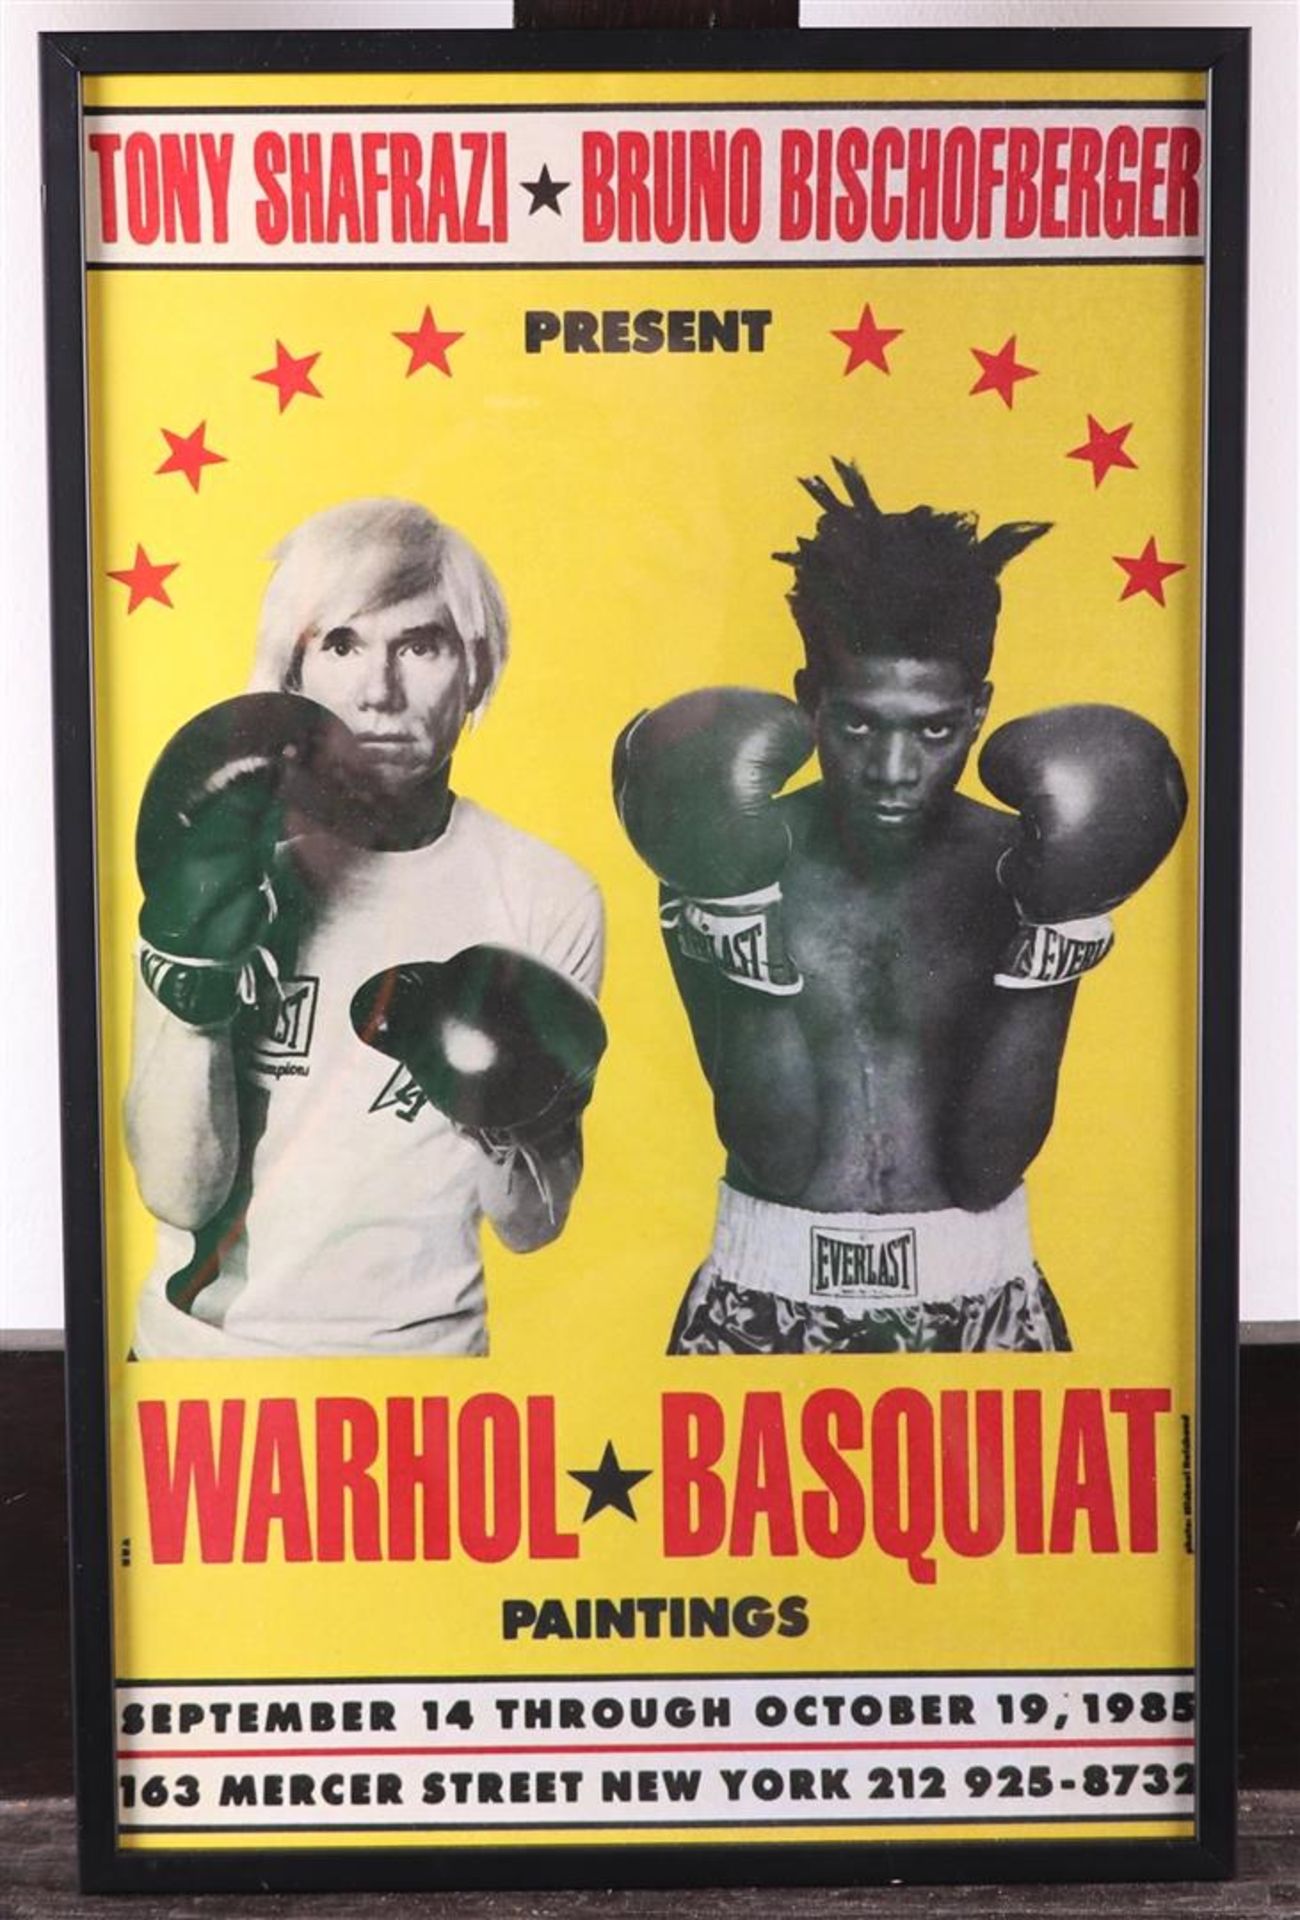 Warhol * Basquiat Boxing Poster, Exhibition New York 1985. Reissue.
